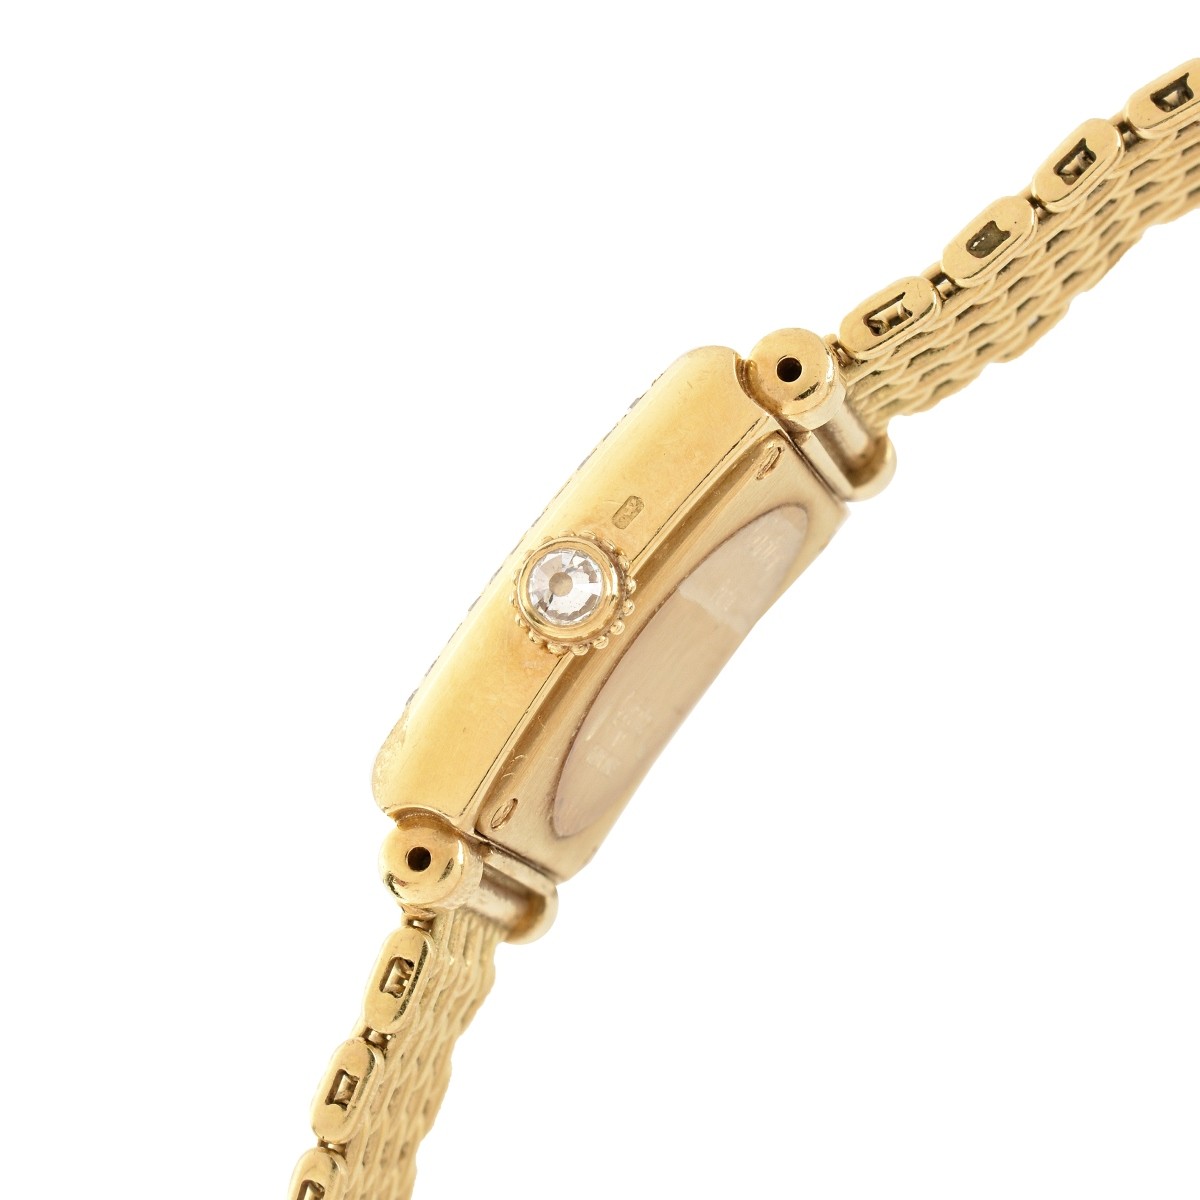 Cartier 18K and Diamond Watch